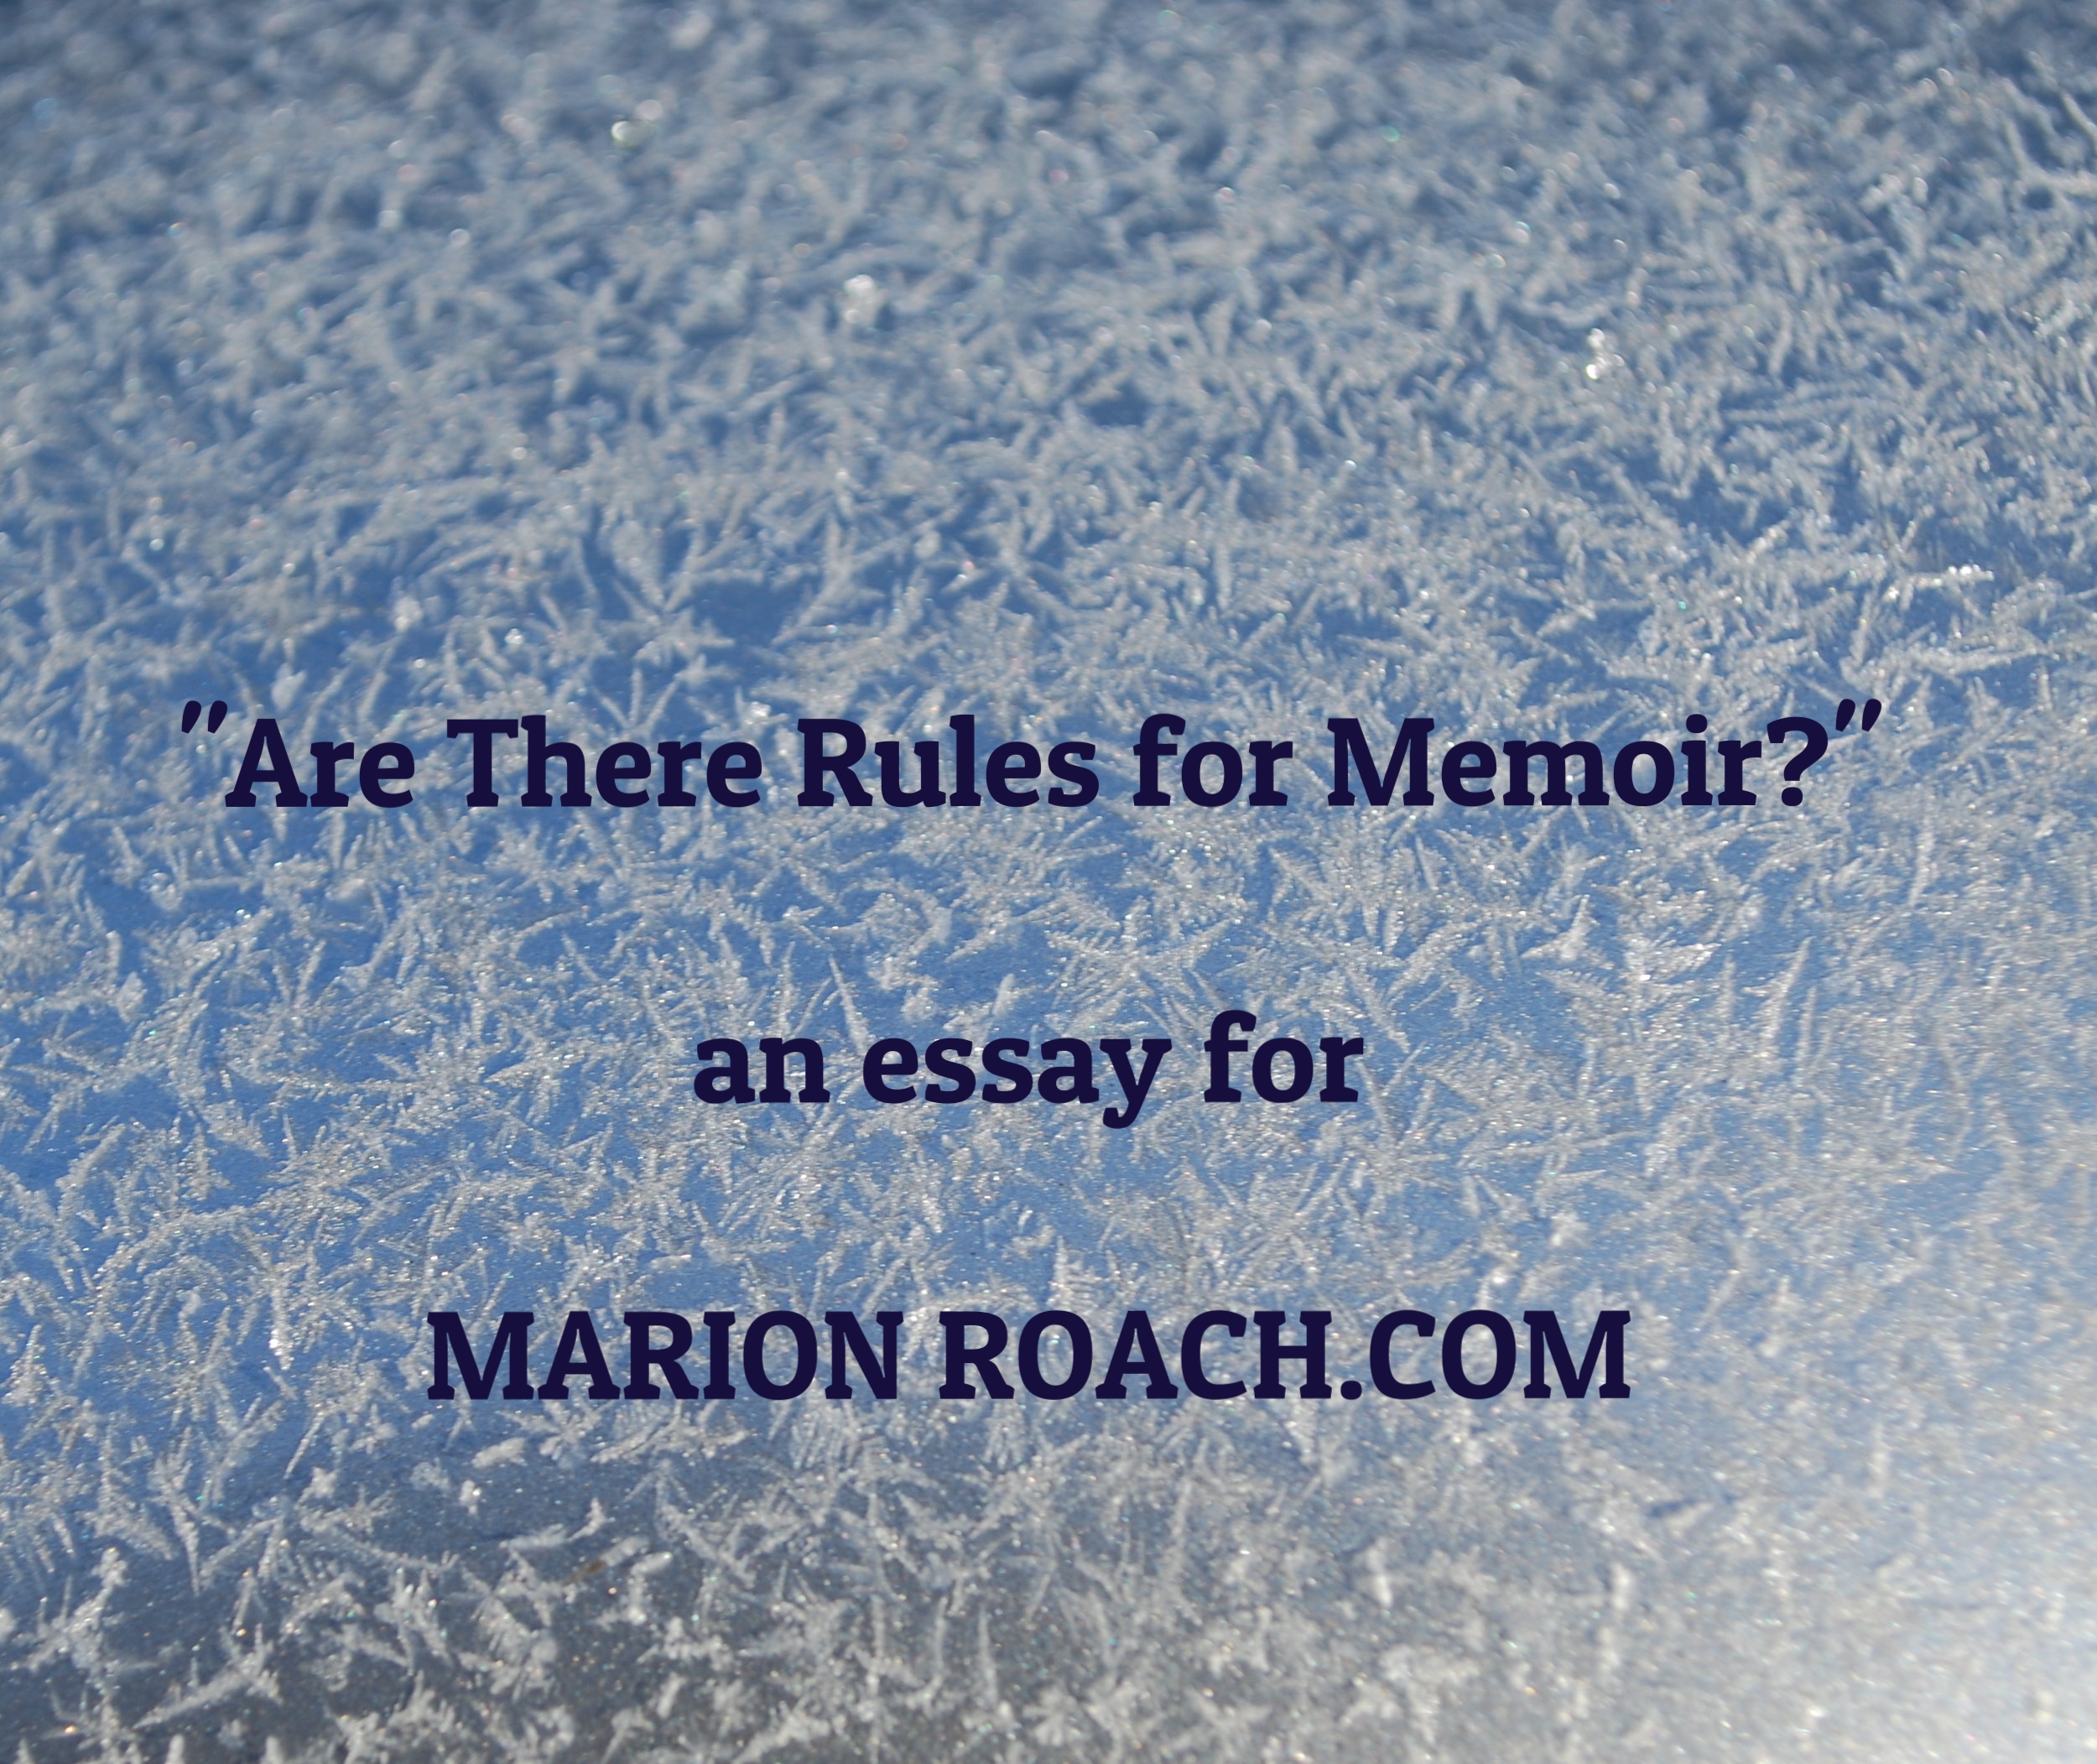 marion roach essay rules for memoir